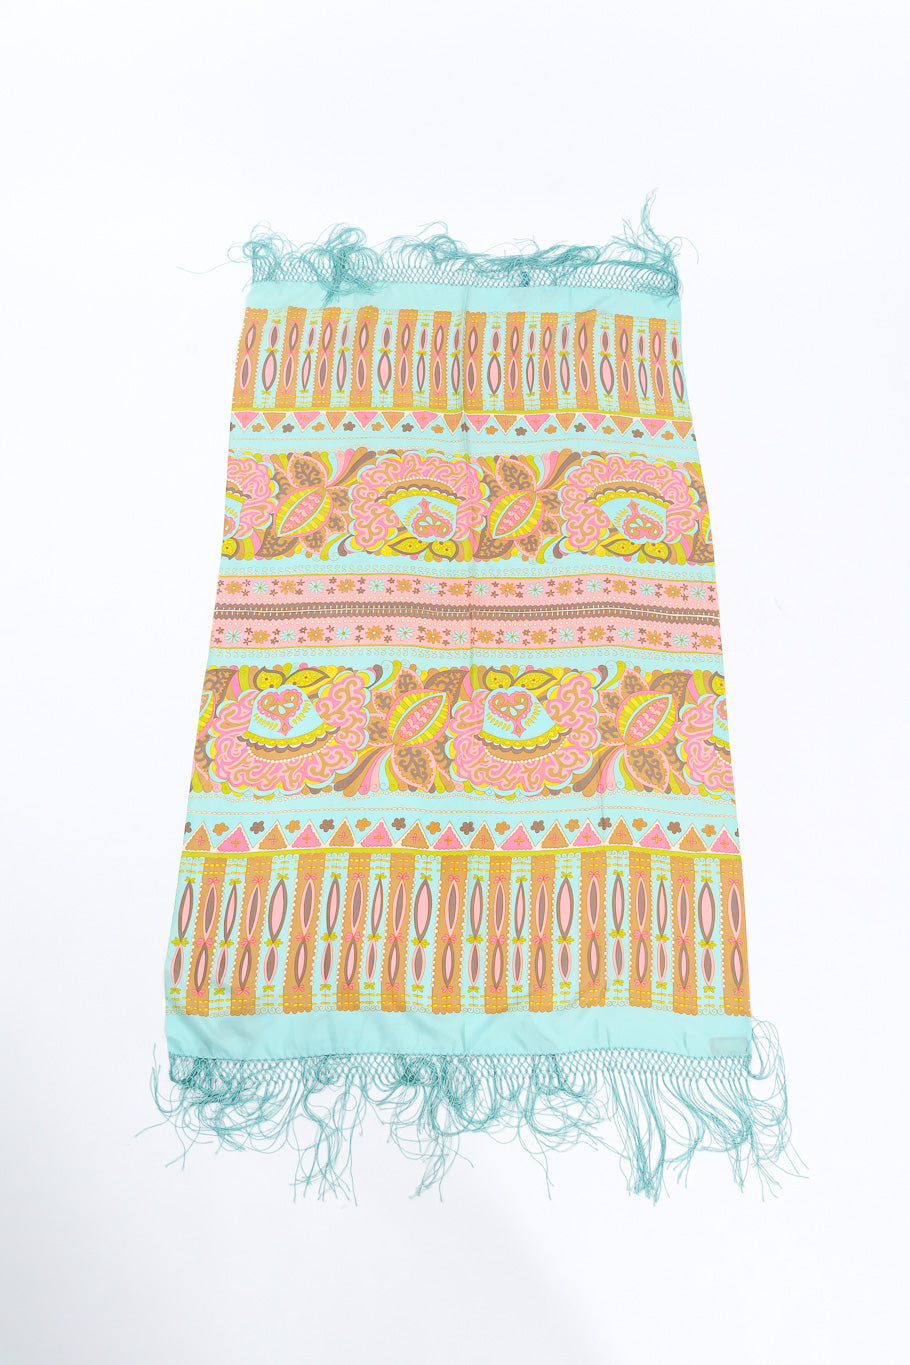 Creazione Serica Lariana bright floral fringe shawl flat-lay product shot @recessla